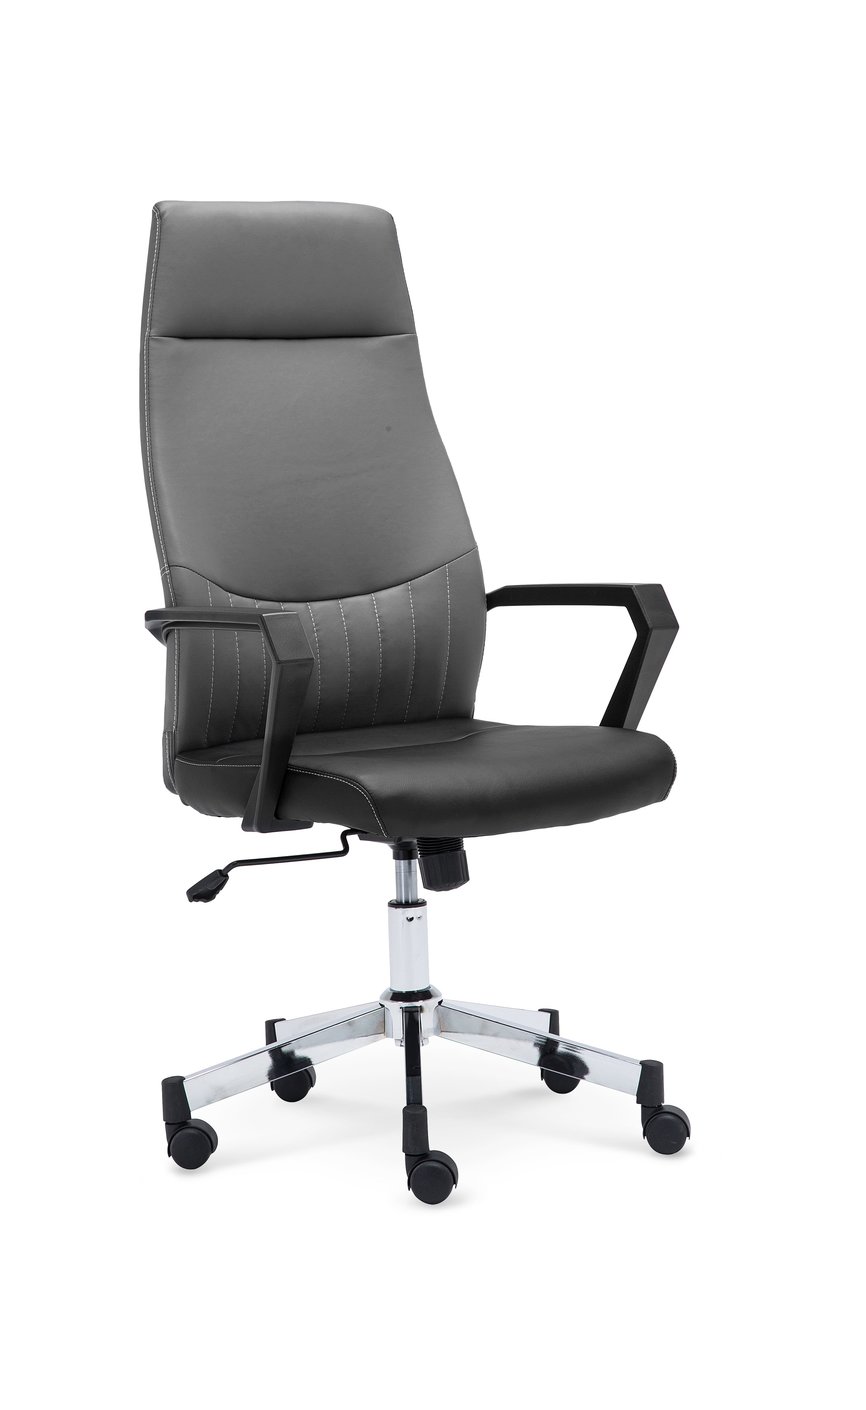 SPYDER office chair